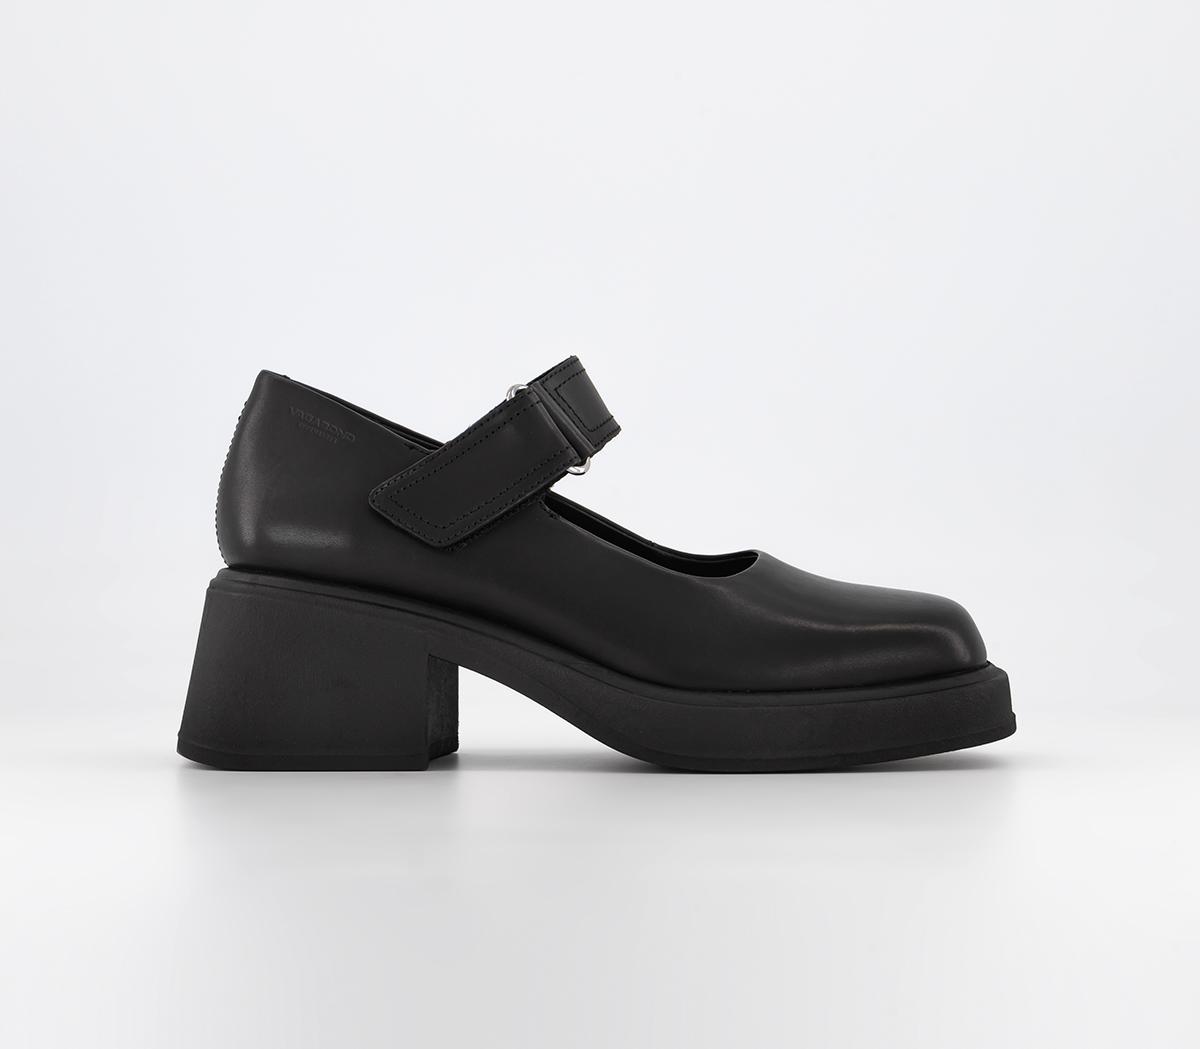 Vagabond Shoemakers Dorah Mary Jane Shoes Black - Mid Heels